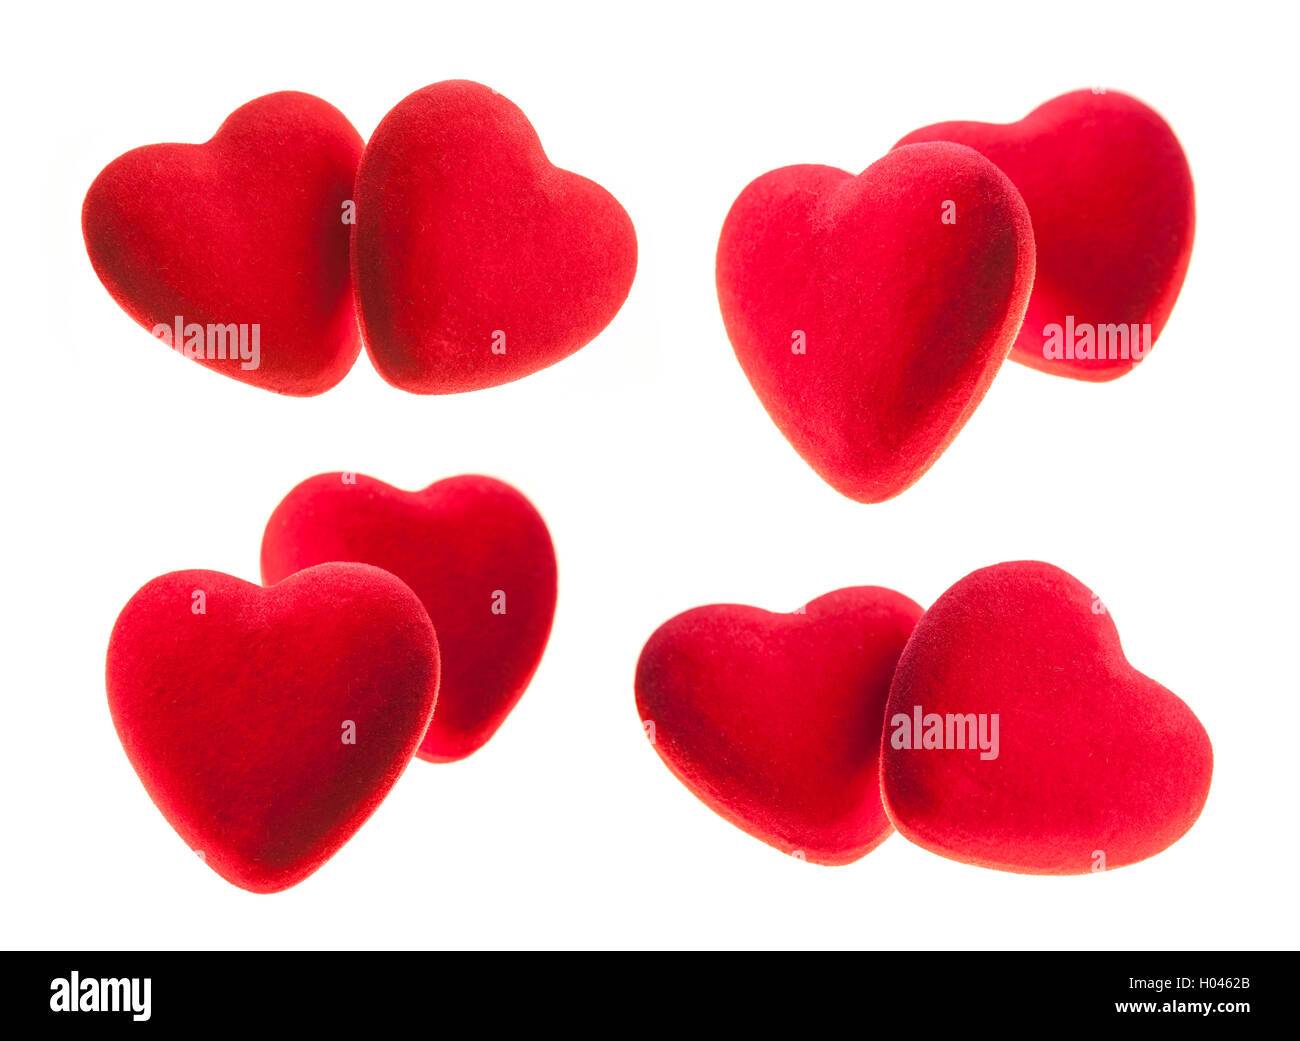 Red velvet hearts isolated on white background. Stock Photo